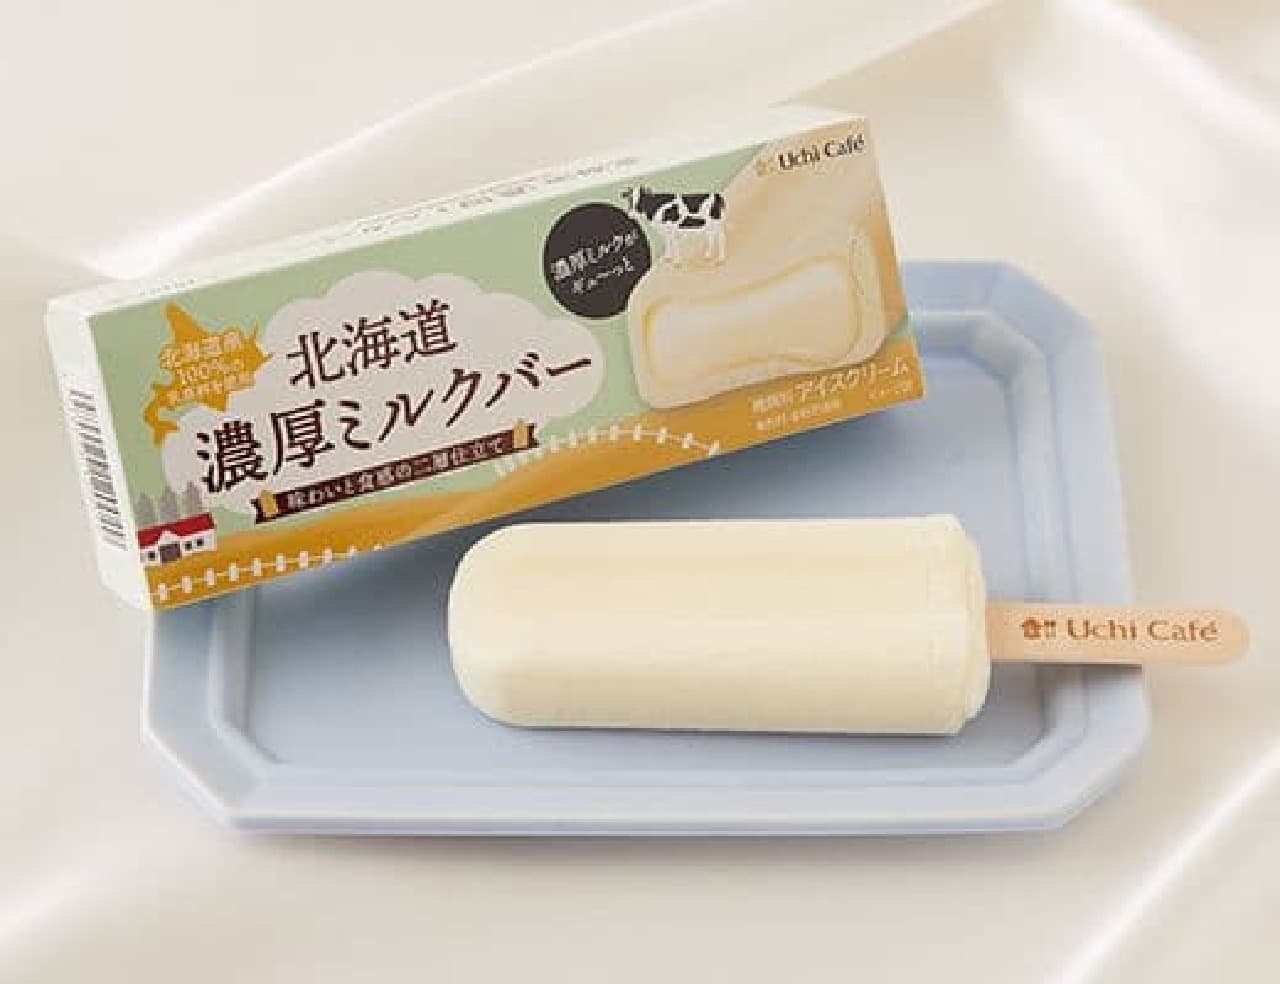 LAWSON "Uchicaffe Hokkaido thick milk bar 80ml